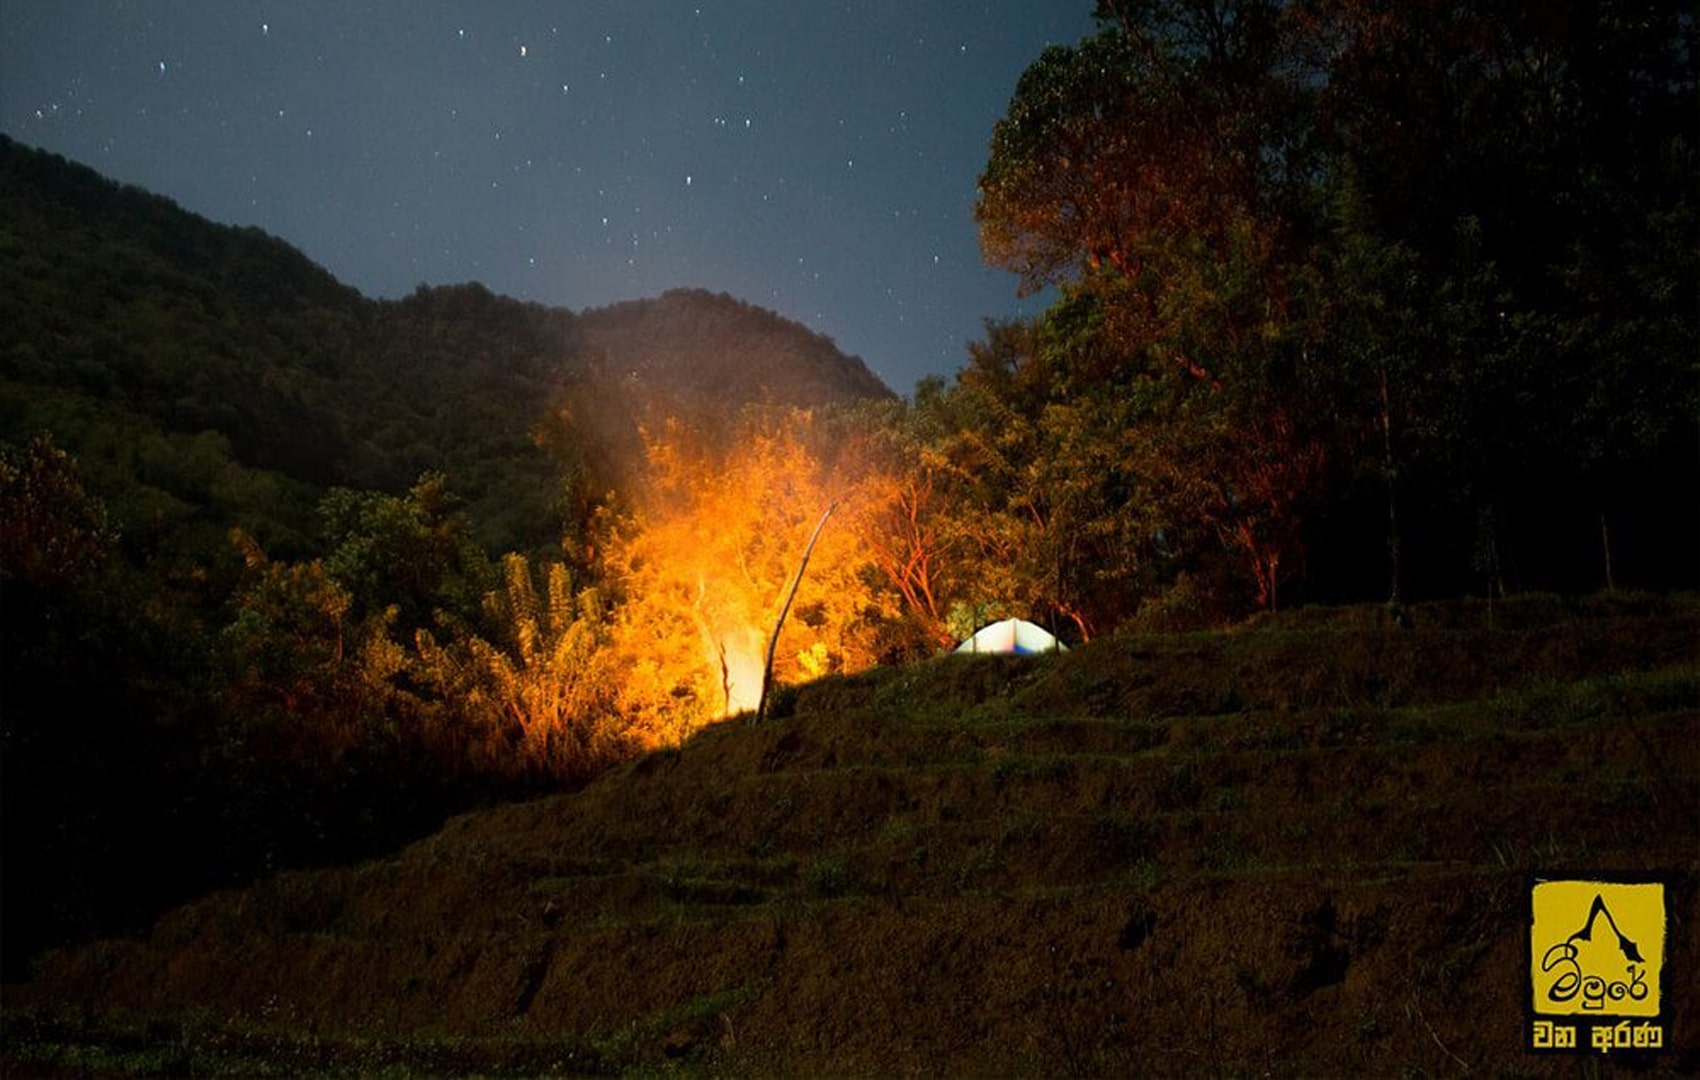 night camping at meemure